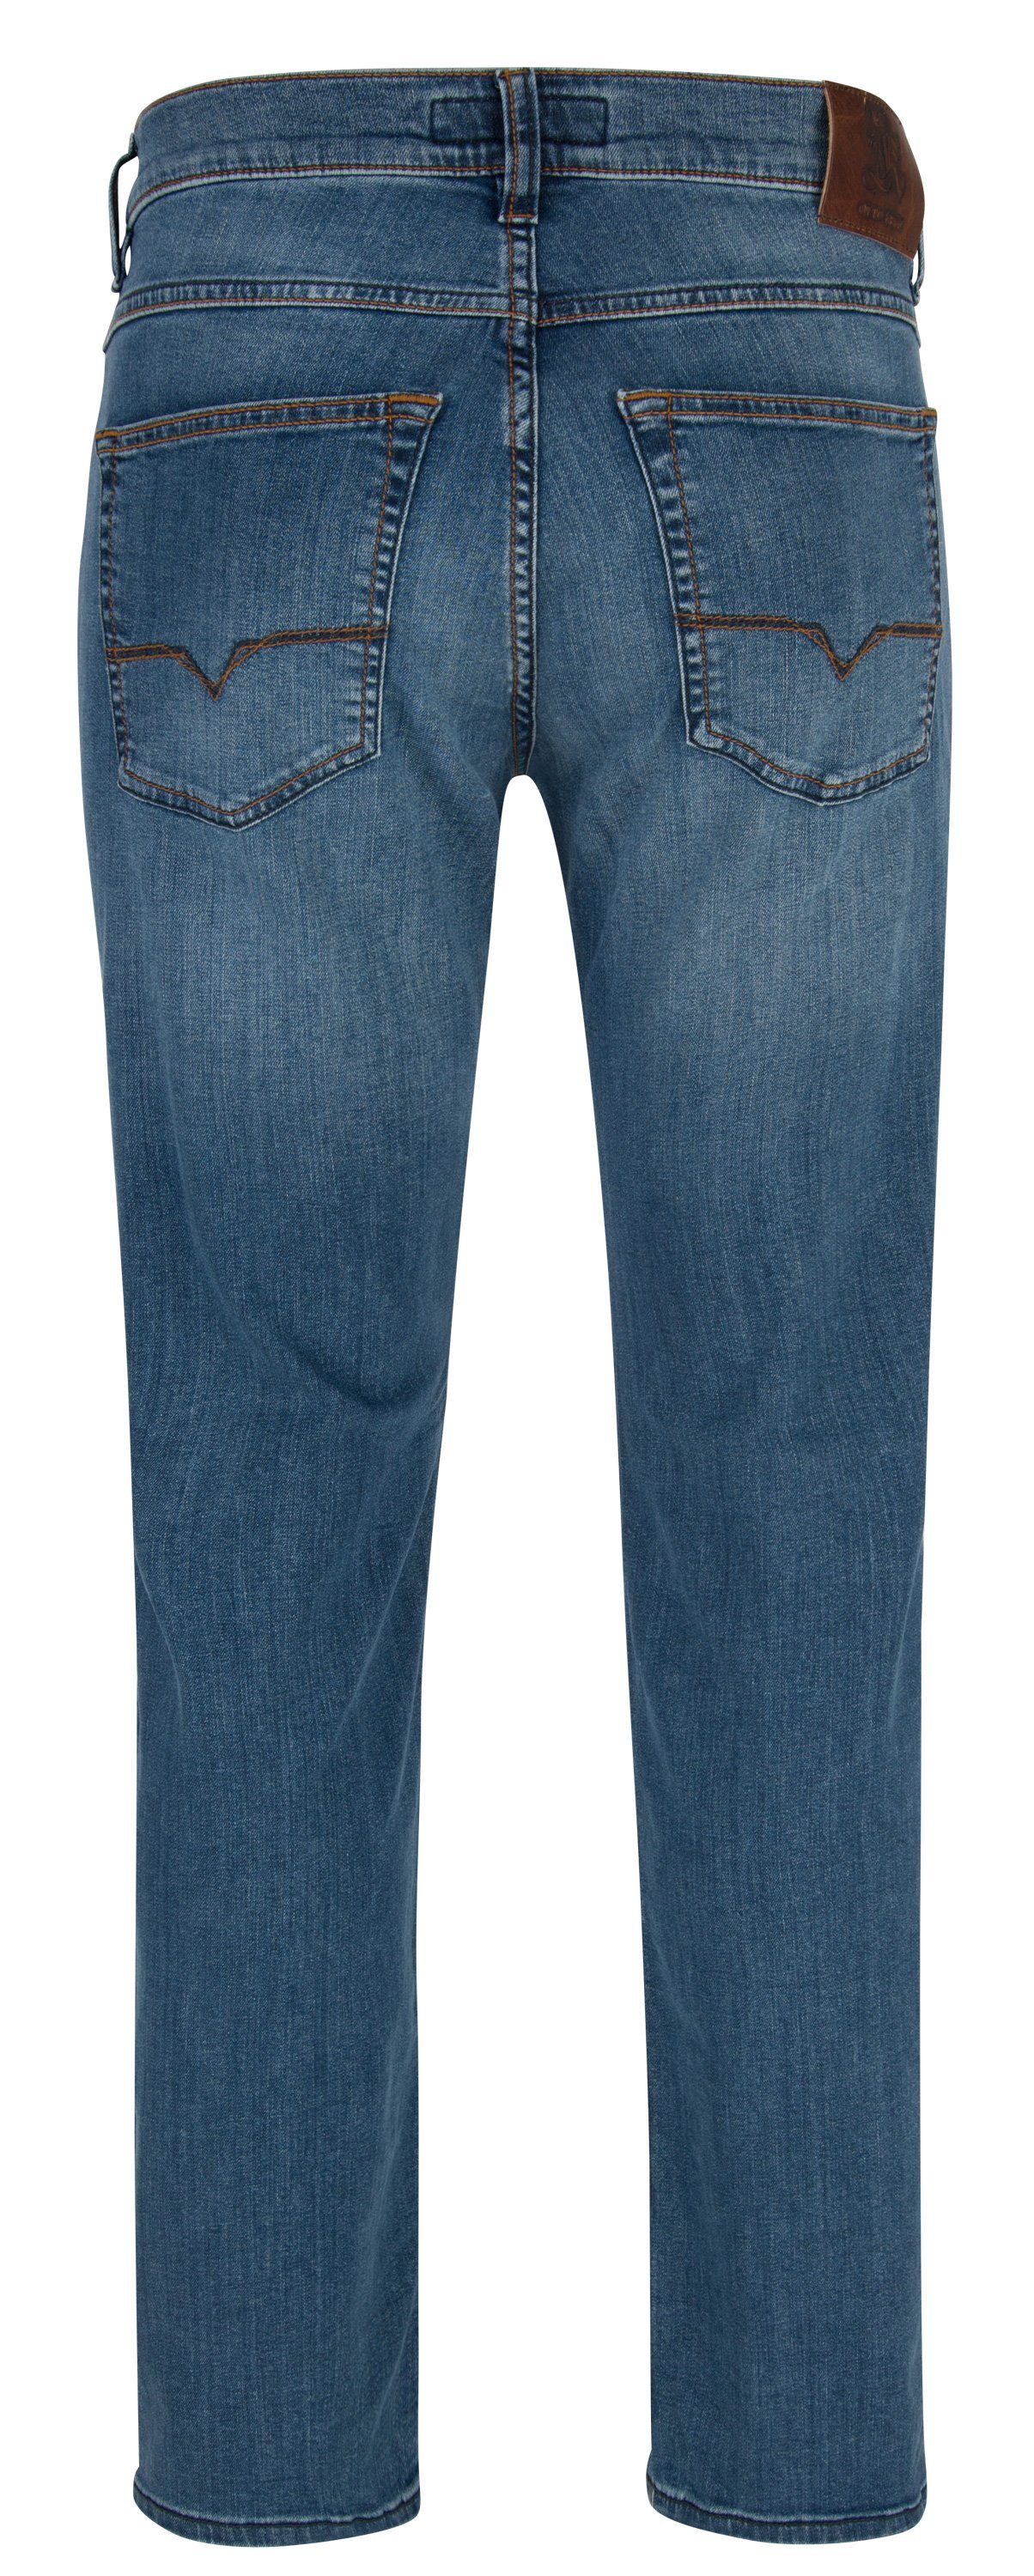 medium 5-Pocket-Jeans 67149 used KERN OTTO JOHN Kern 6960.6824 buffies blue